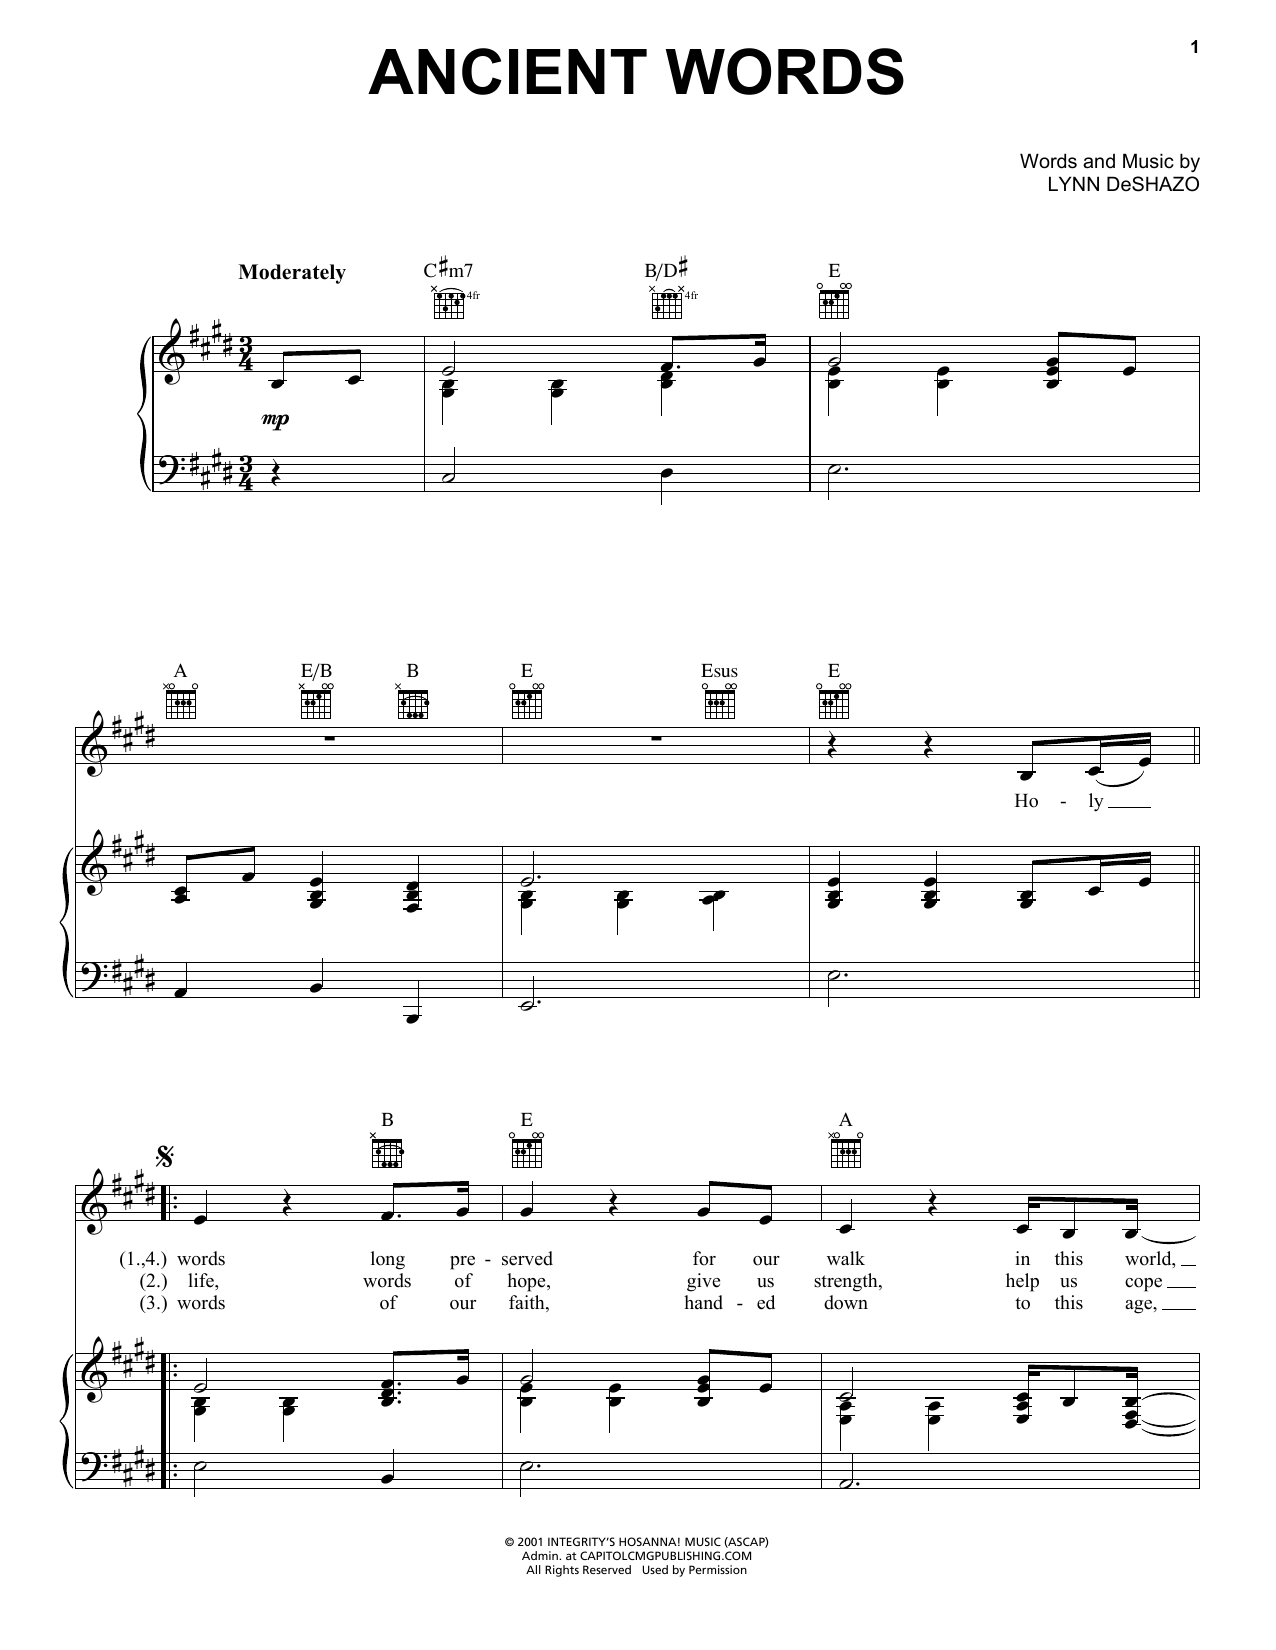 Lynn DeShazo Ancient Words Sheet Music Notes & Chords for Chord Buddy - Download or Print PDF